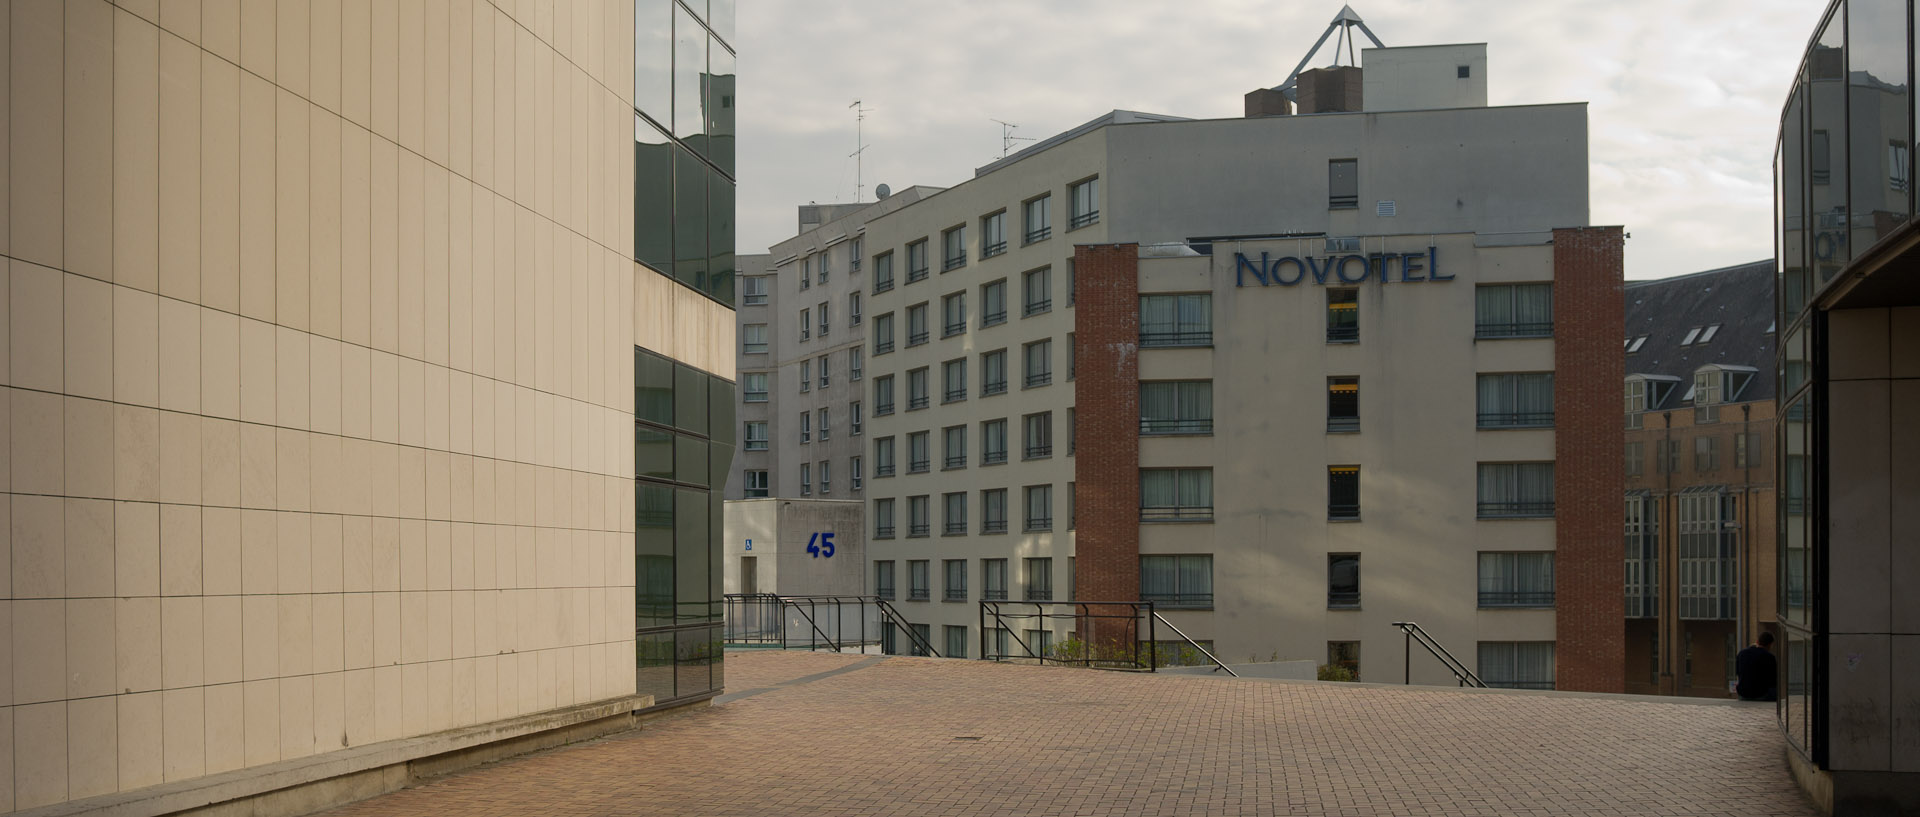 Novotel, rue de Tournai, à Lille.